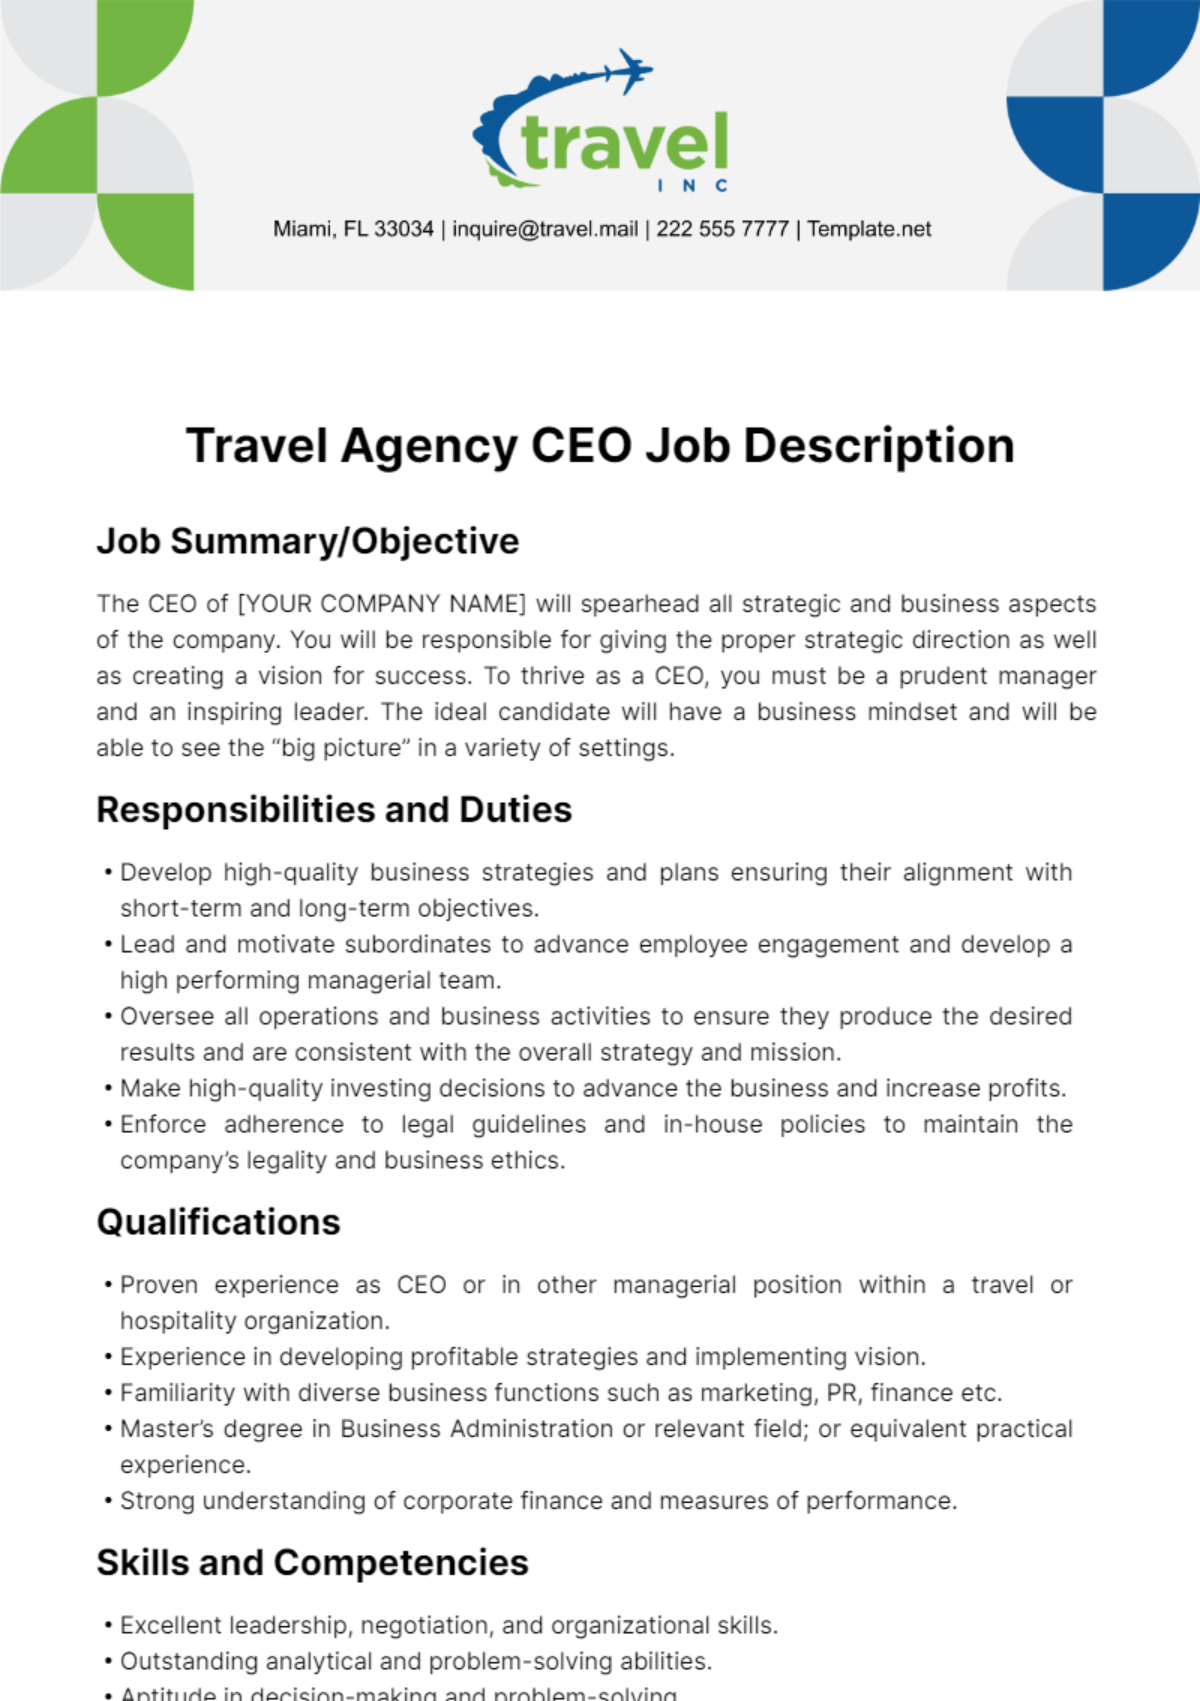 Free Travel Agency CEO Job Description Template